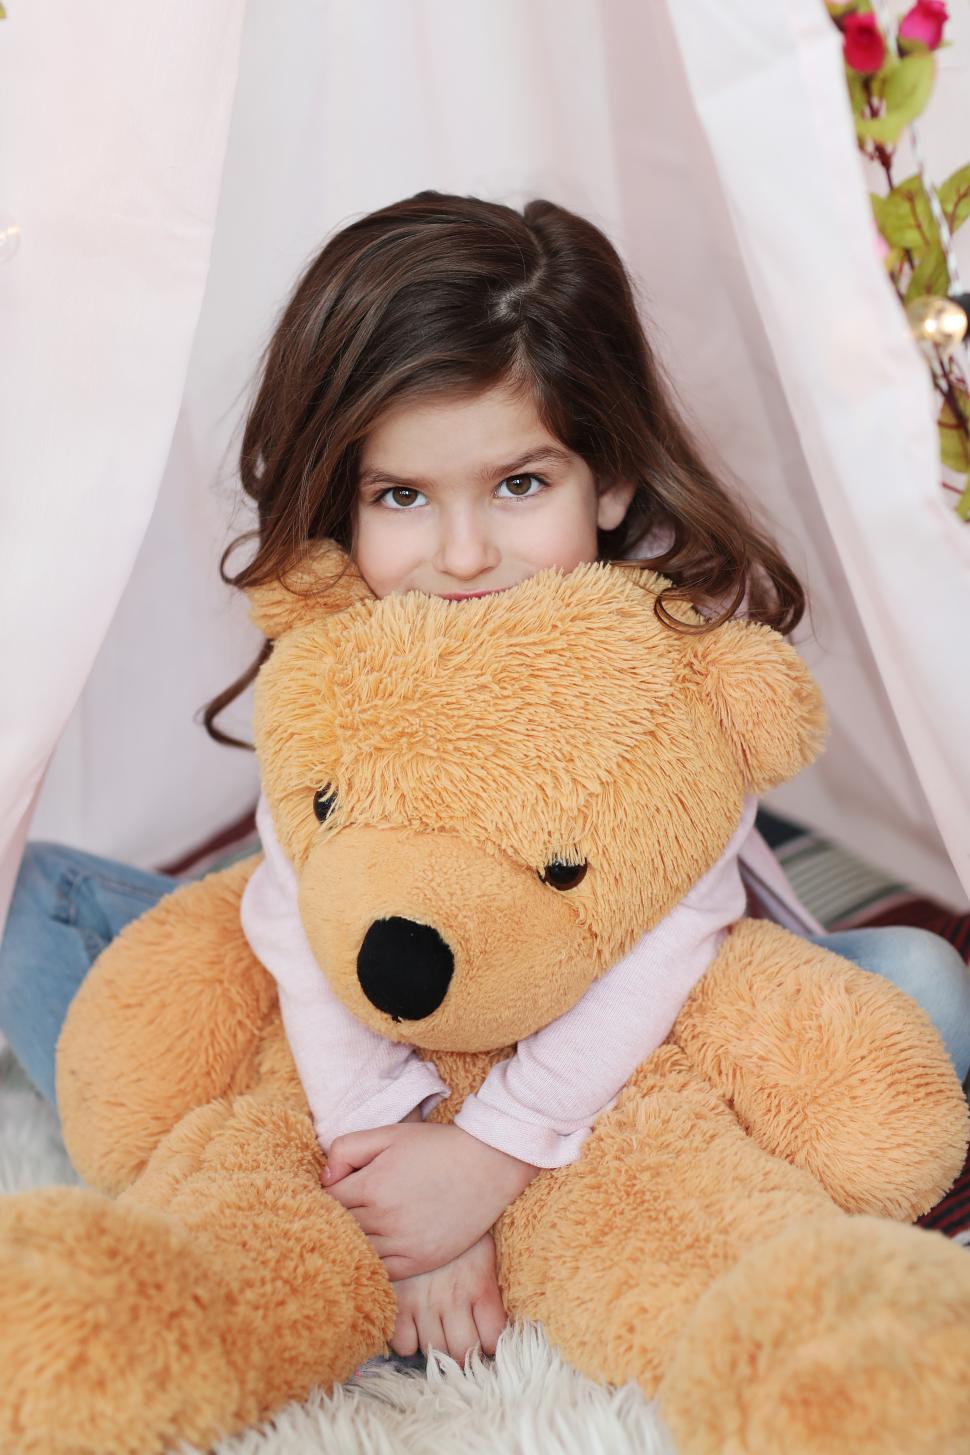 Free Image of Child hugging large teddy bear 